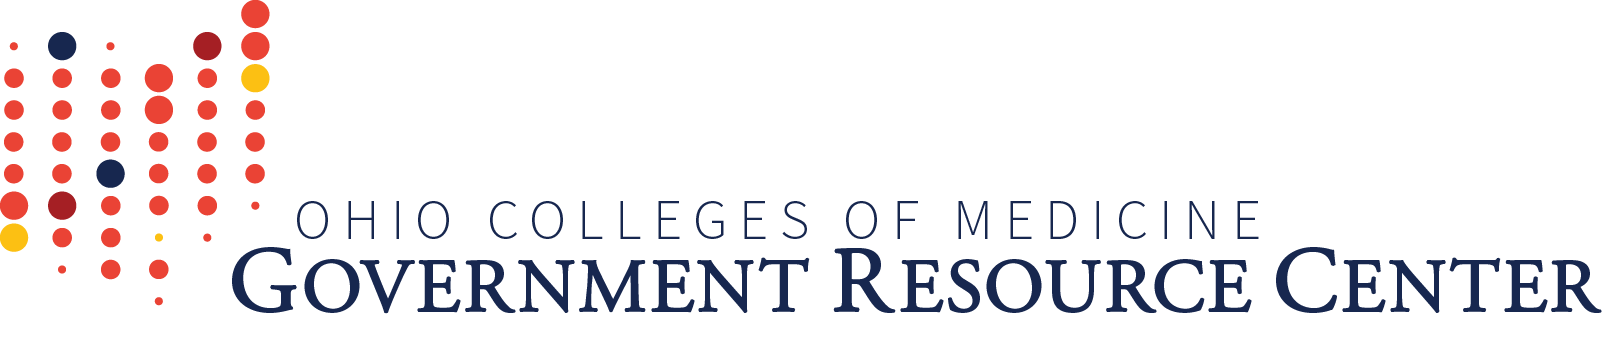 Ohio Colleges of Medicine Government Resource Center (GRC) logo